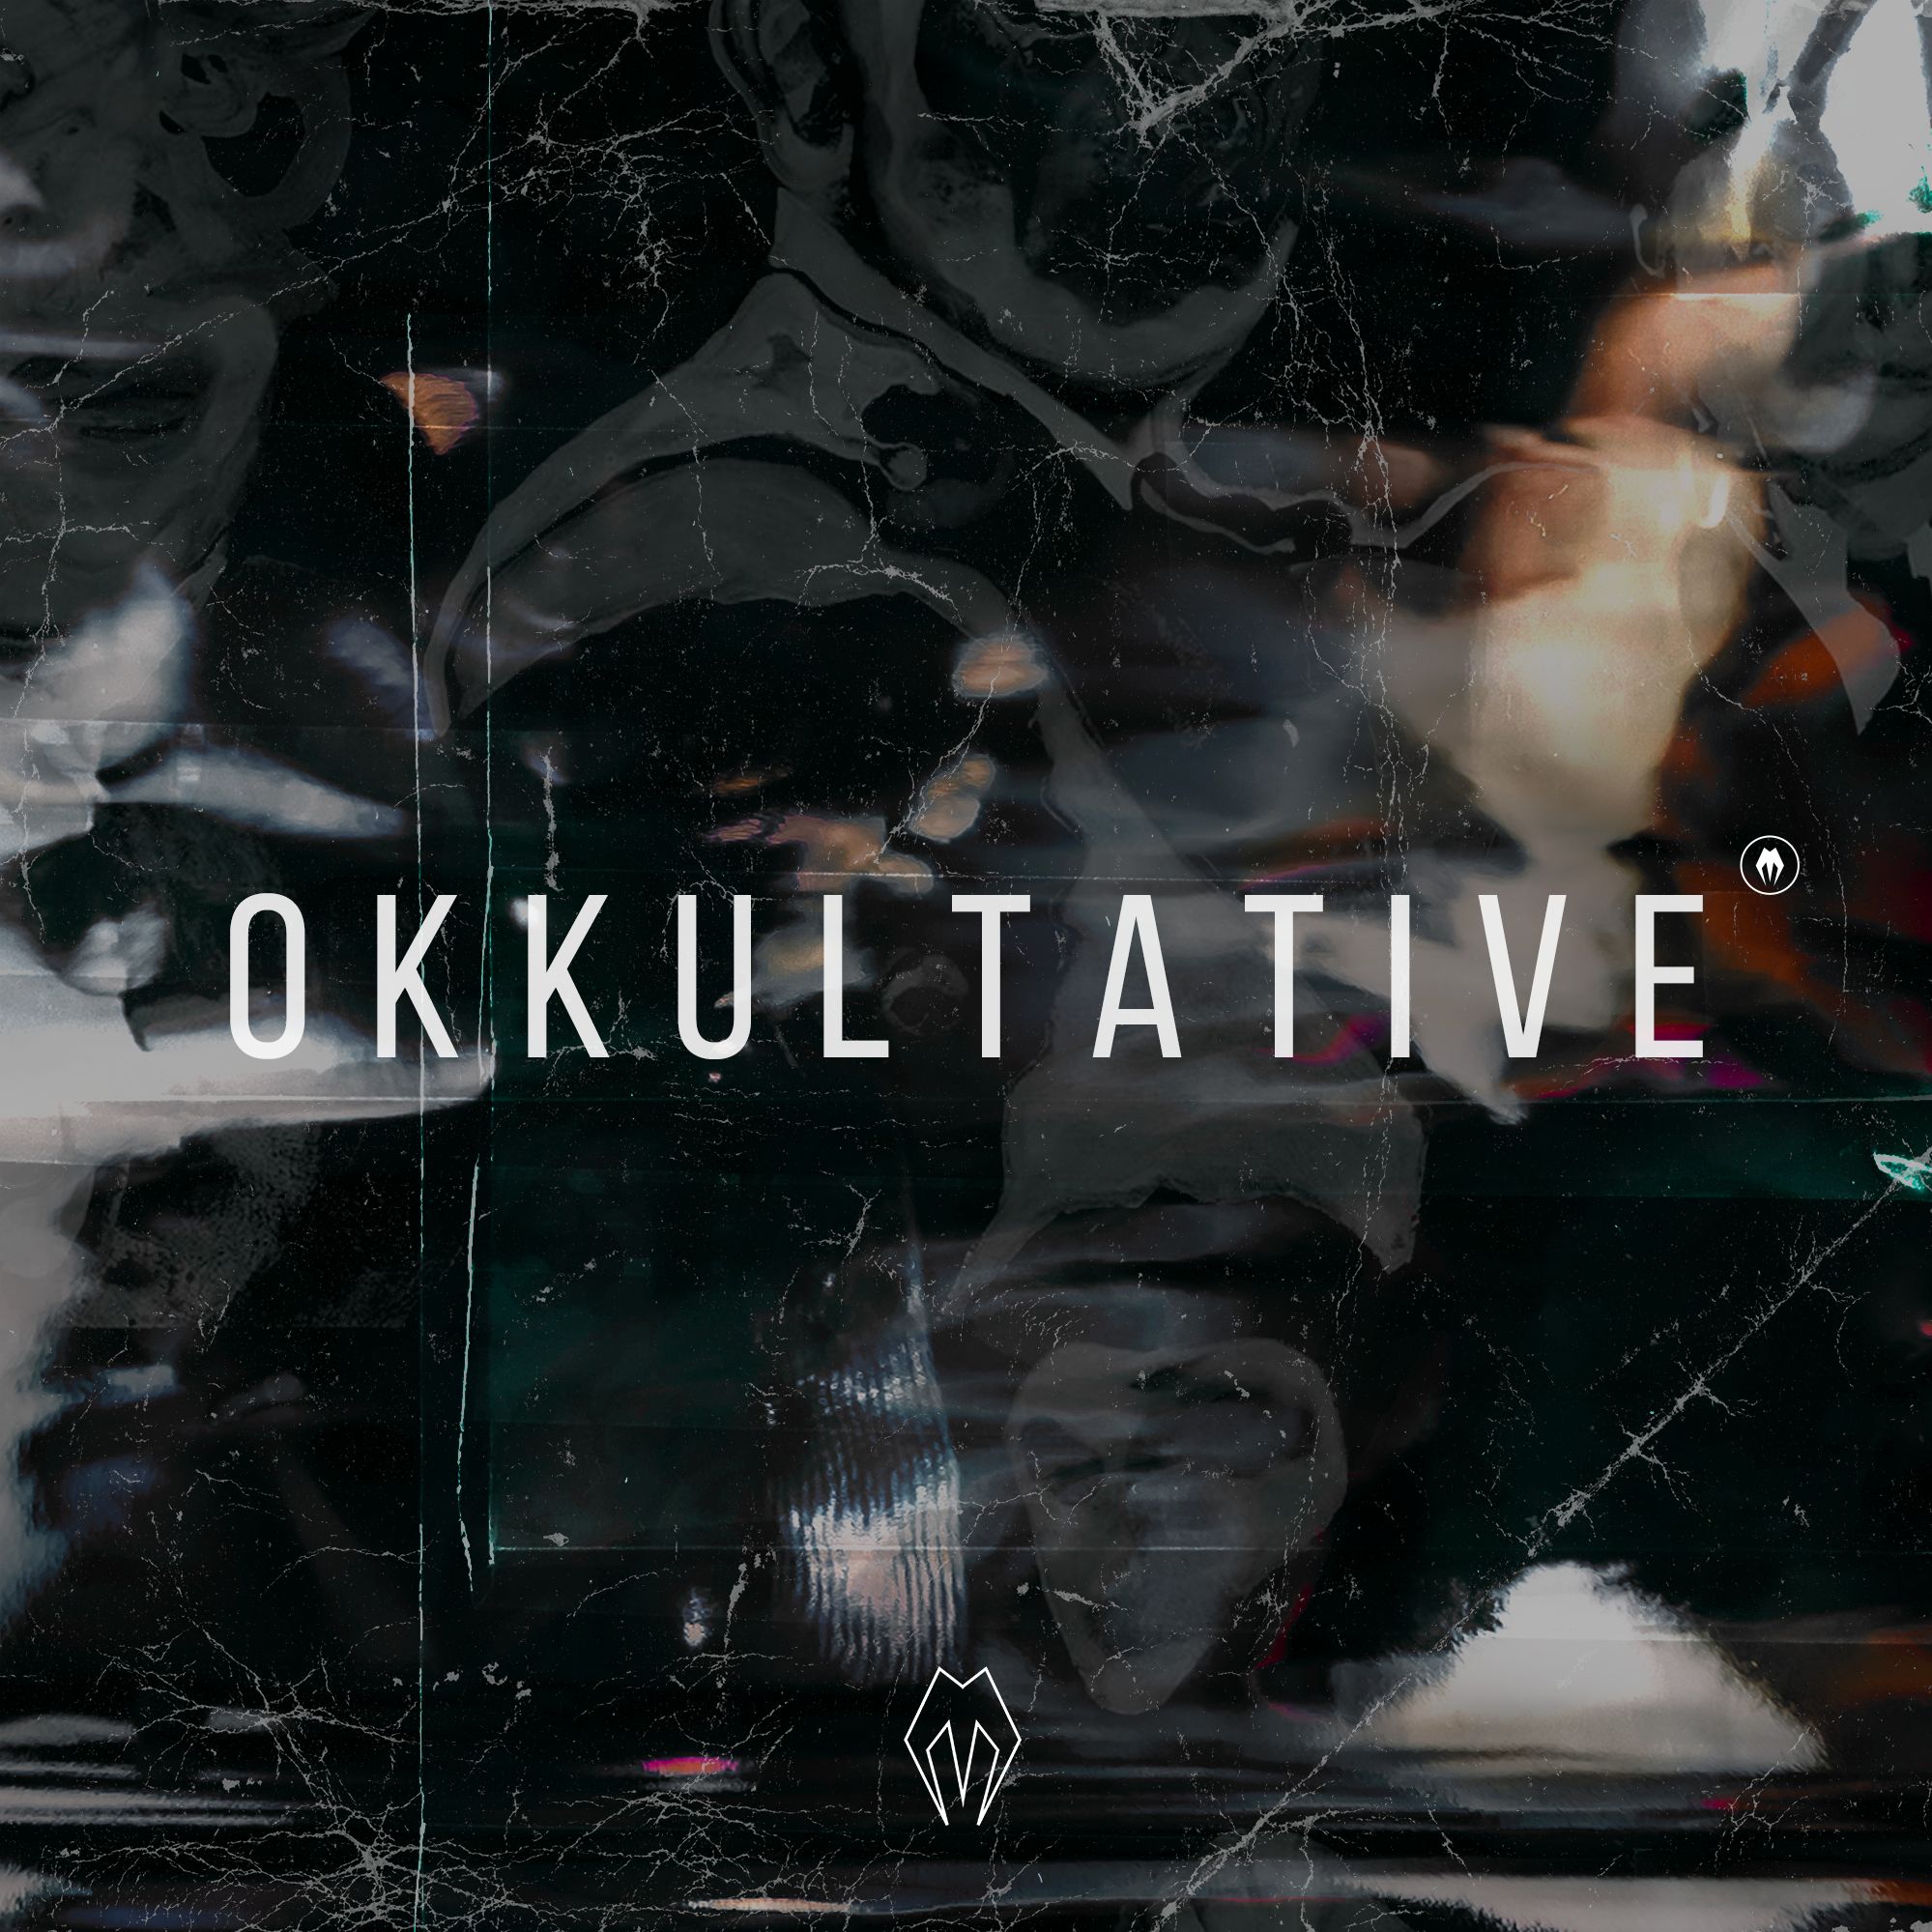 Download Okkultative at M - Broken island